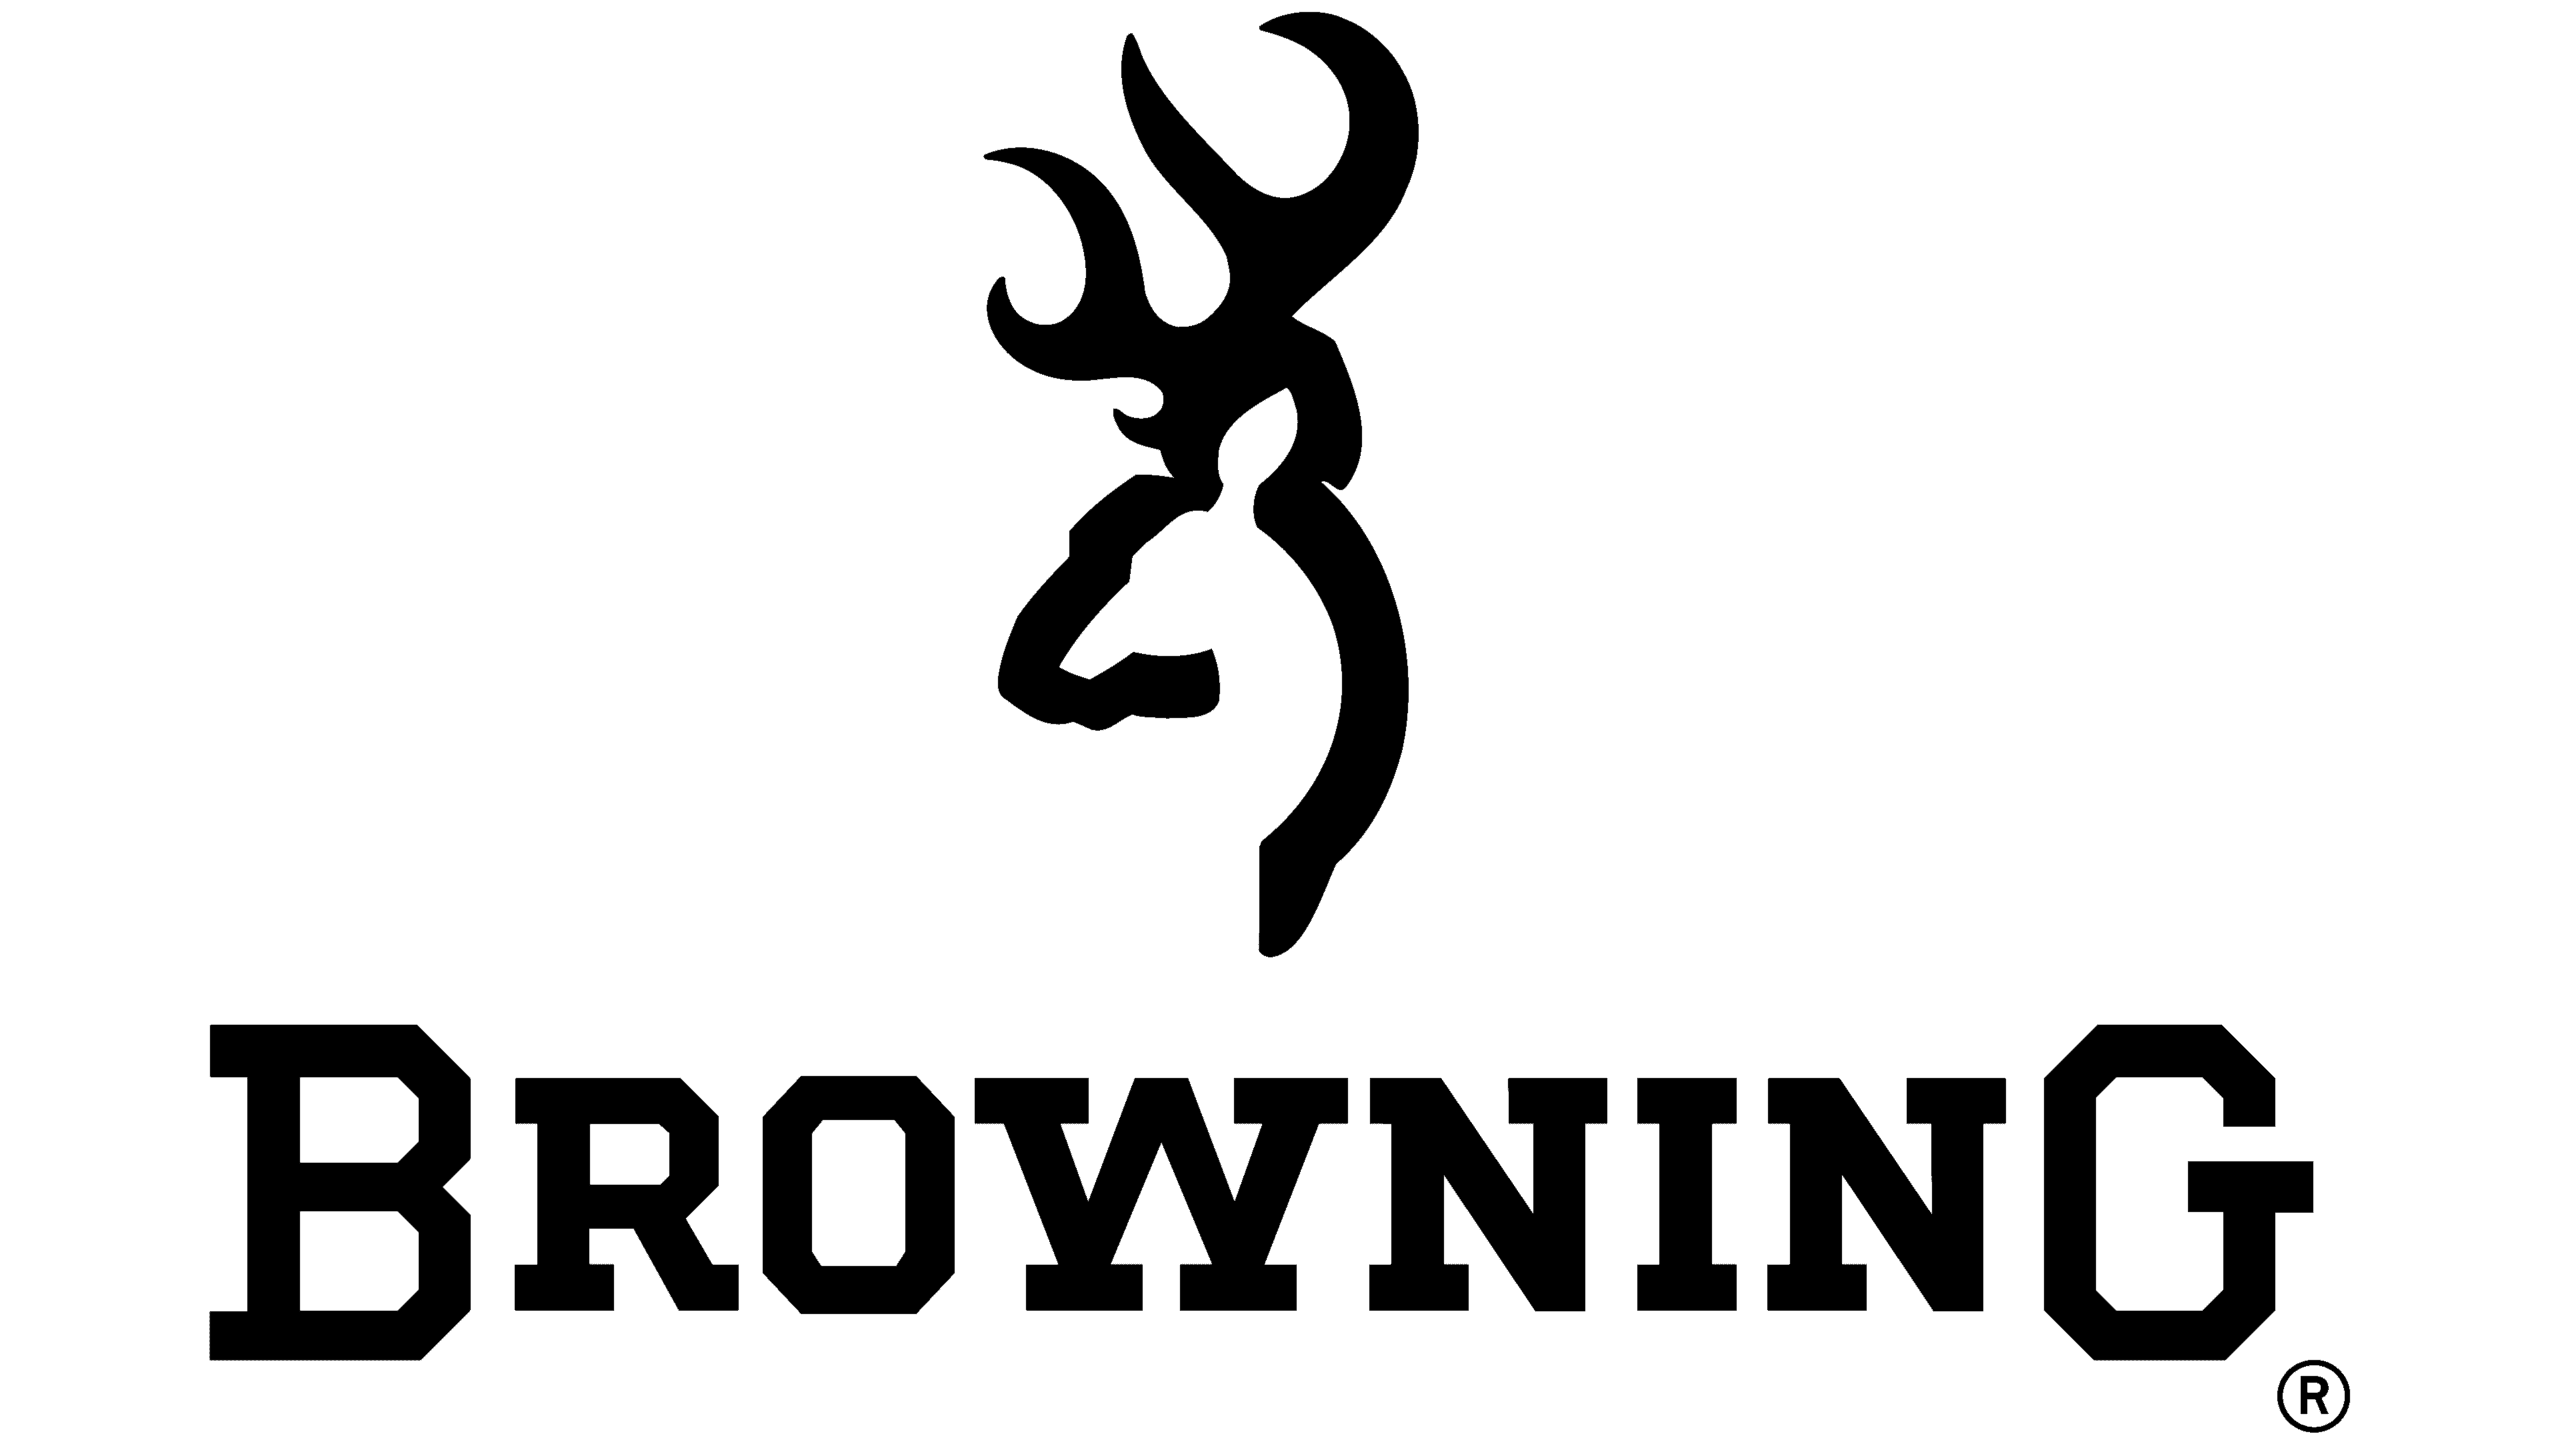 Browning logo with deer outline